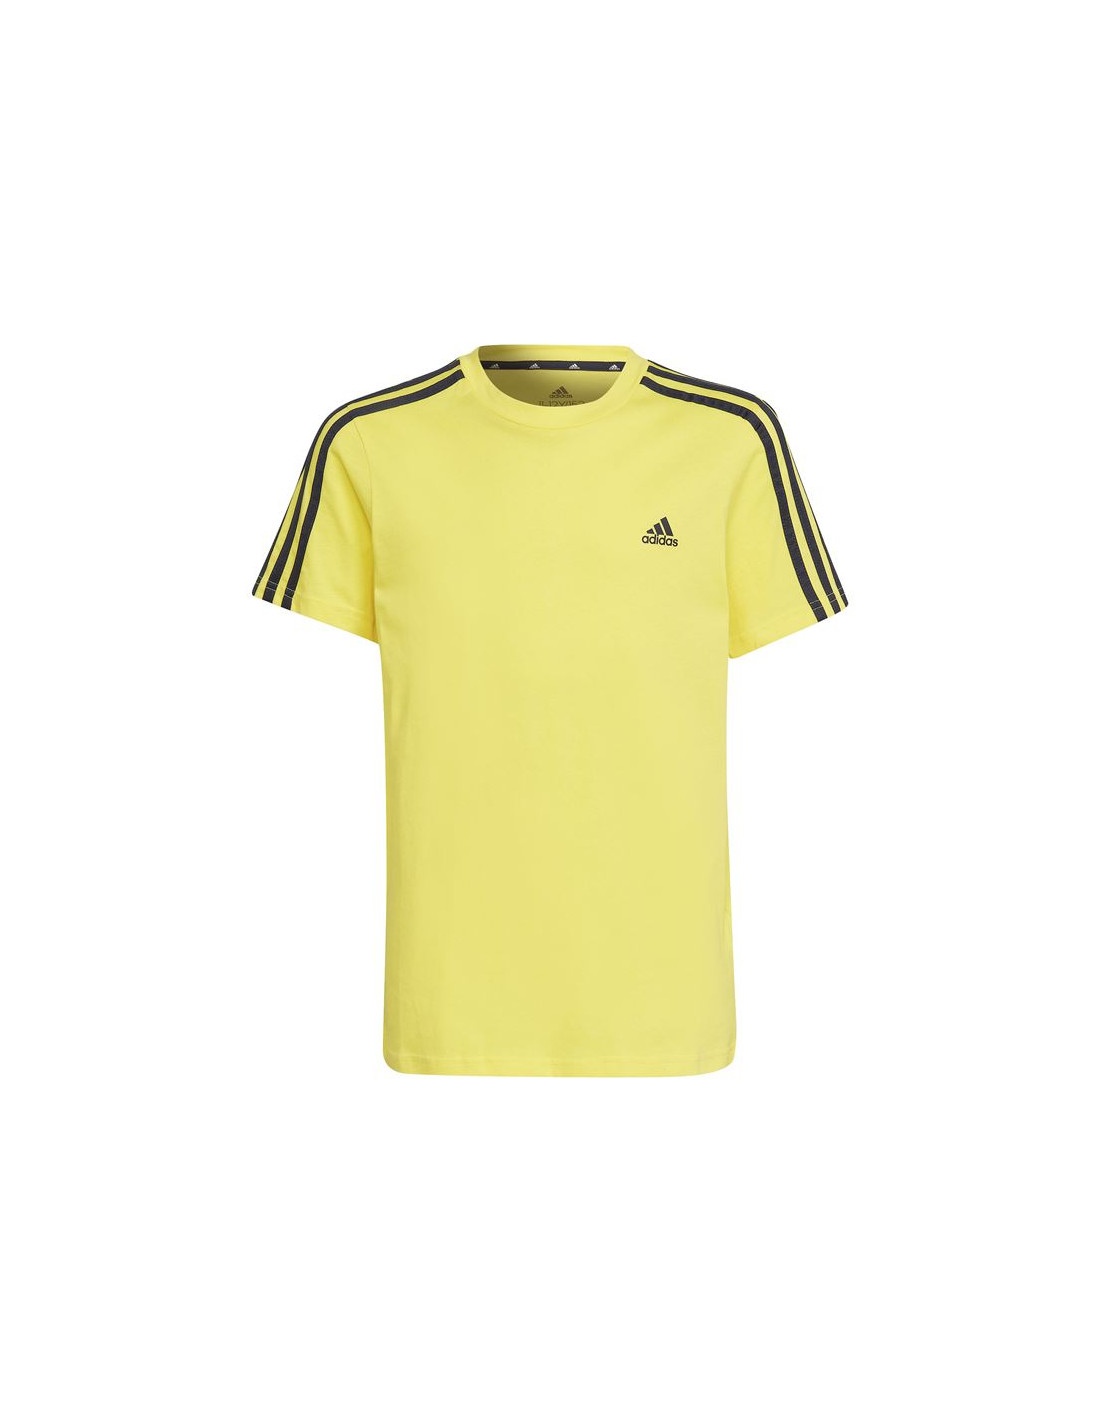 Camiseta adidas essentials 3 bandas niño yellow